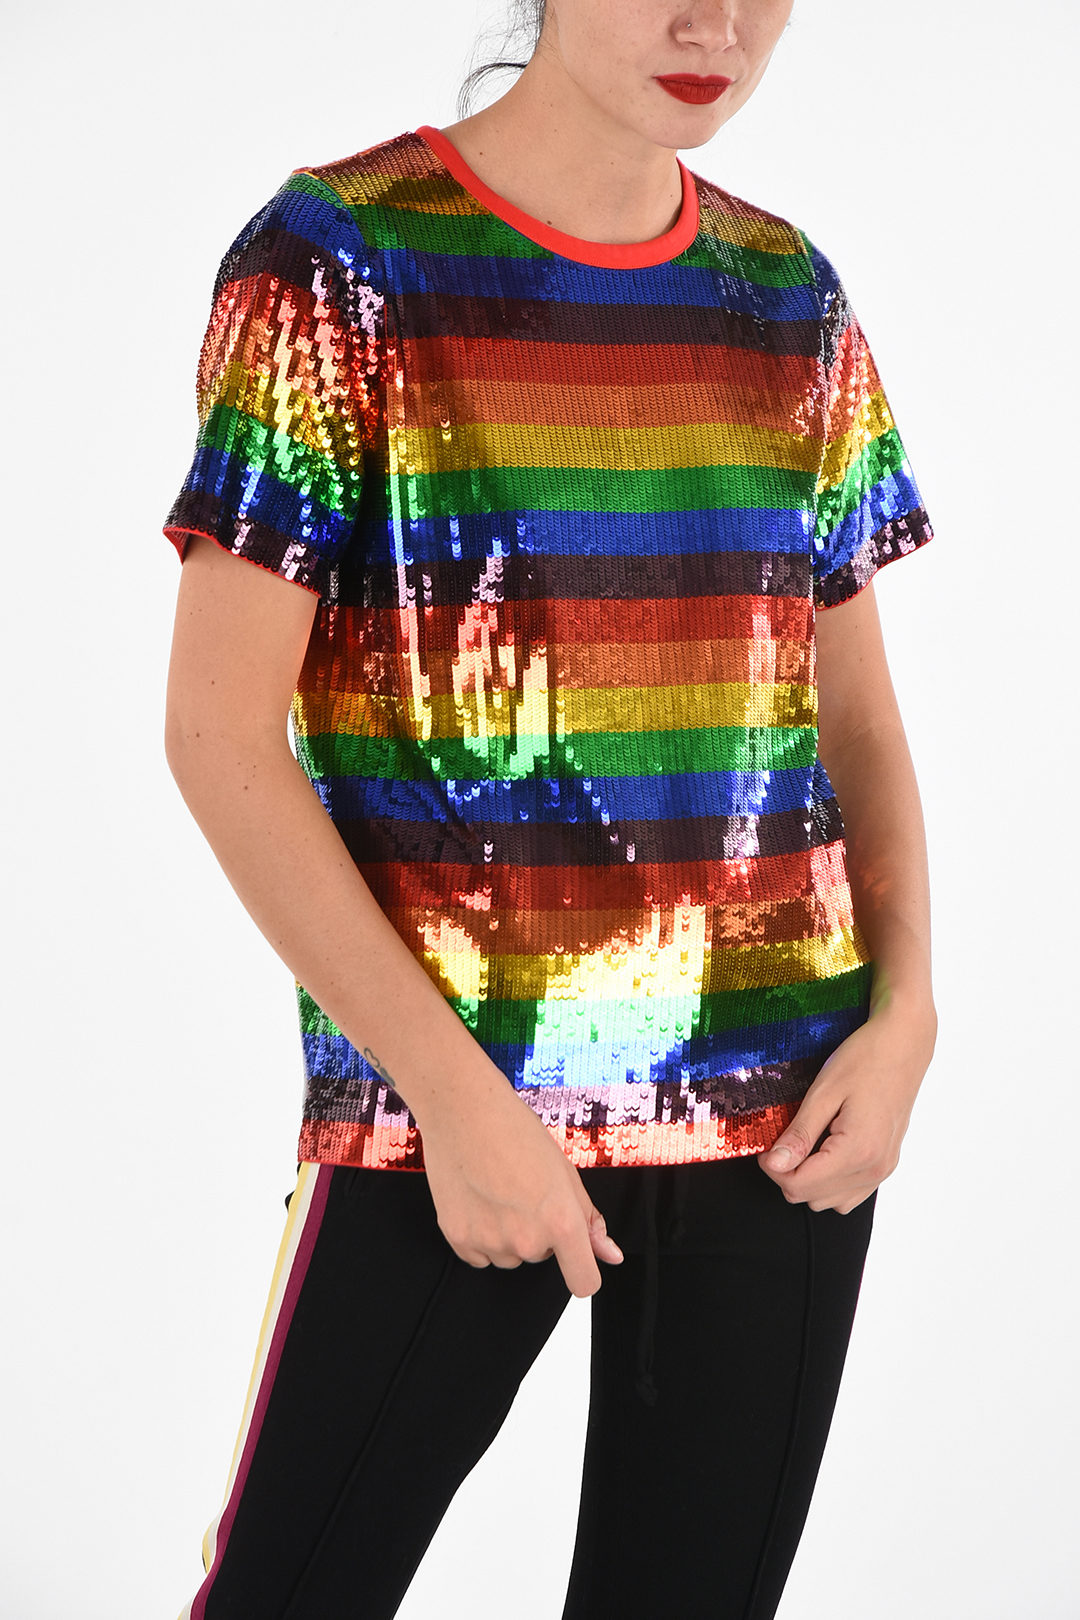 Michael Kors Sequined RAINBOW T-shirt women - Glamood Outlet